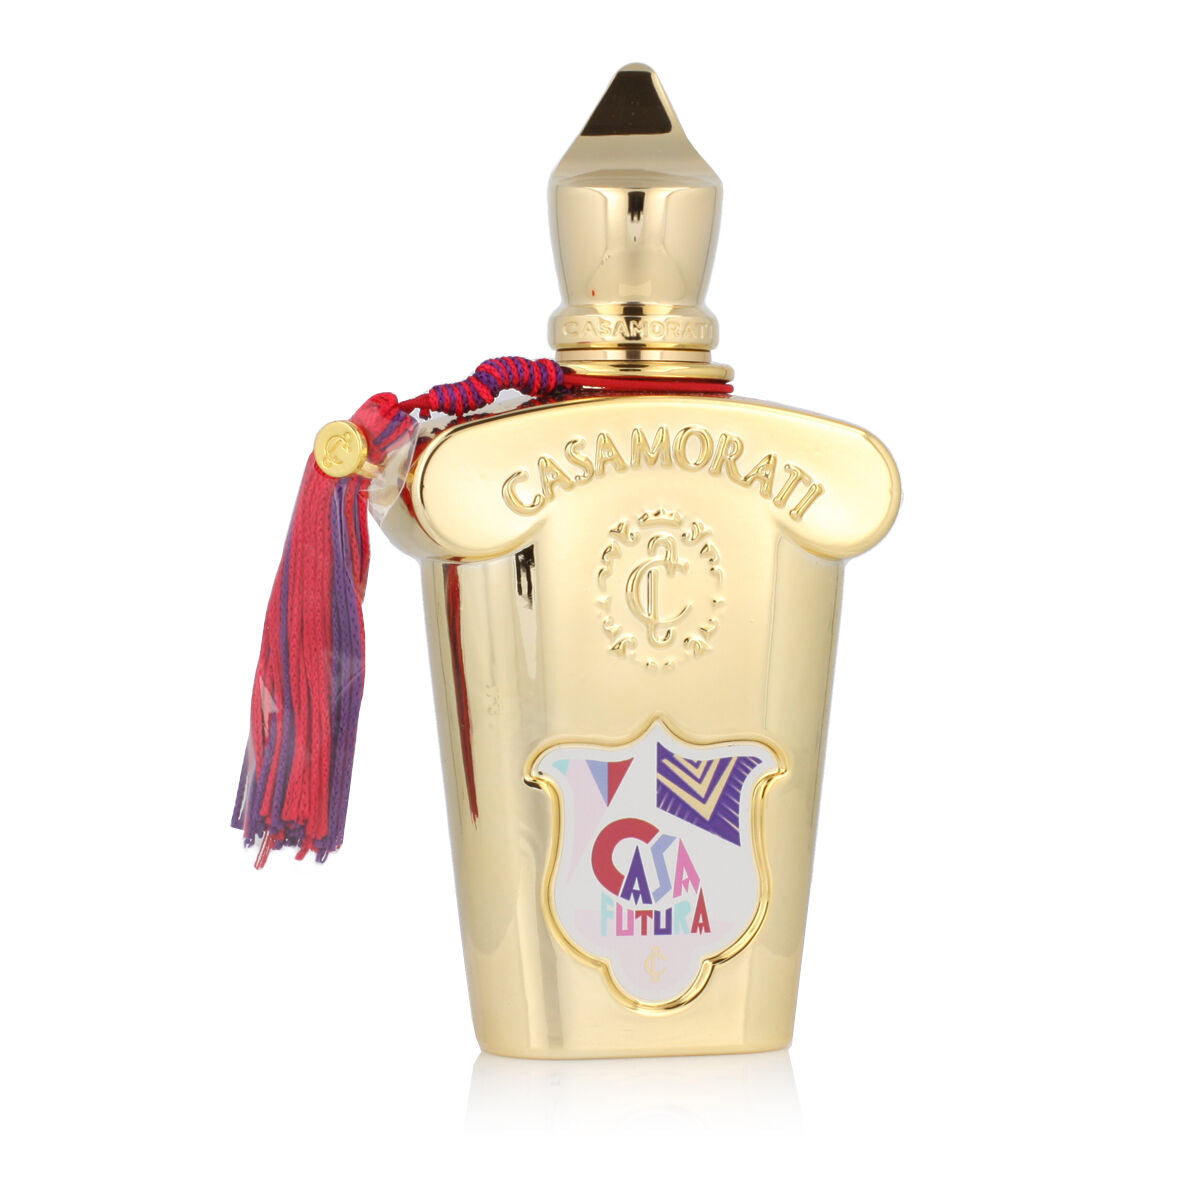 Kaufe Unisex-Parfüm Xerjoff EDP Casamorati 1888 Casafutura 100 ml bei AWK Flagship um € 191.00